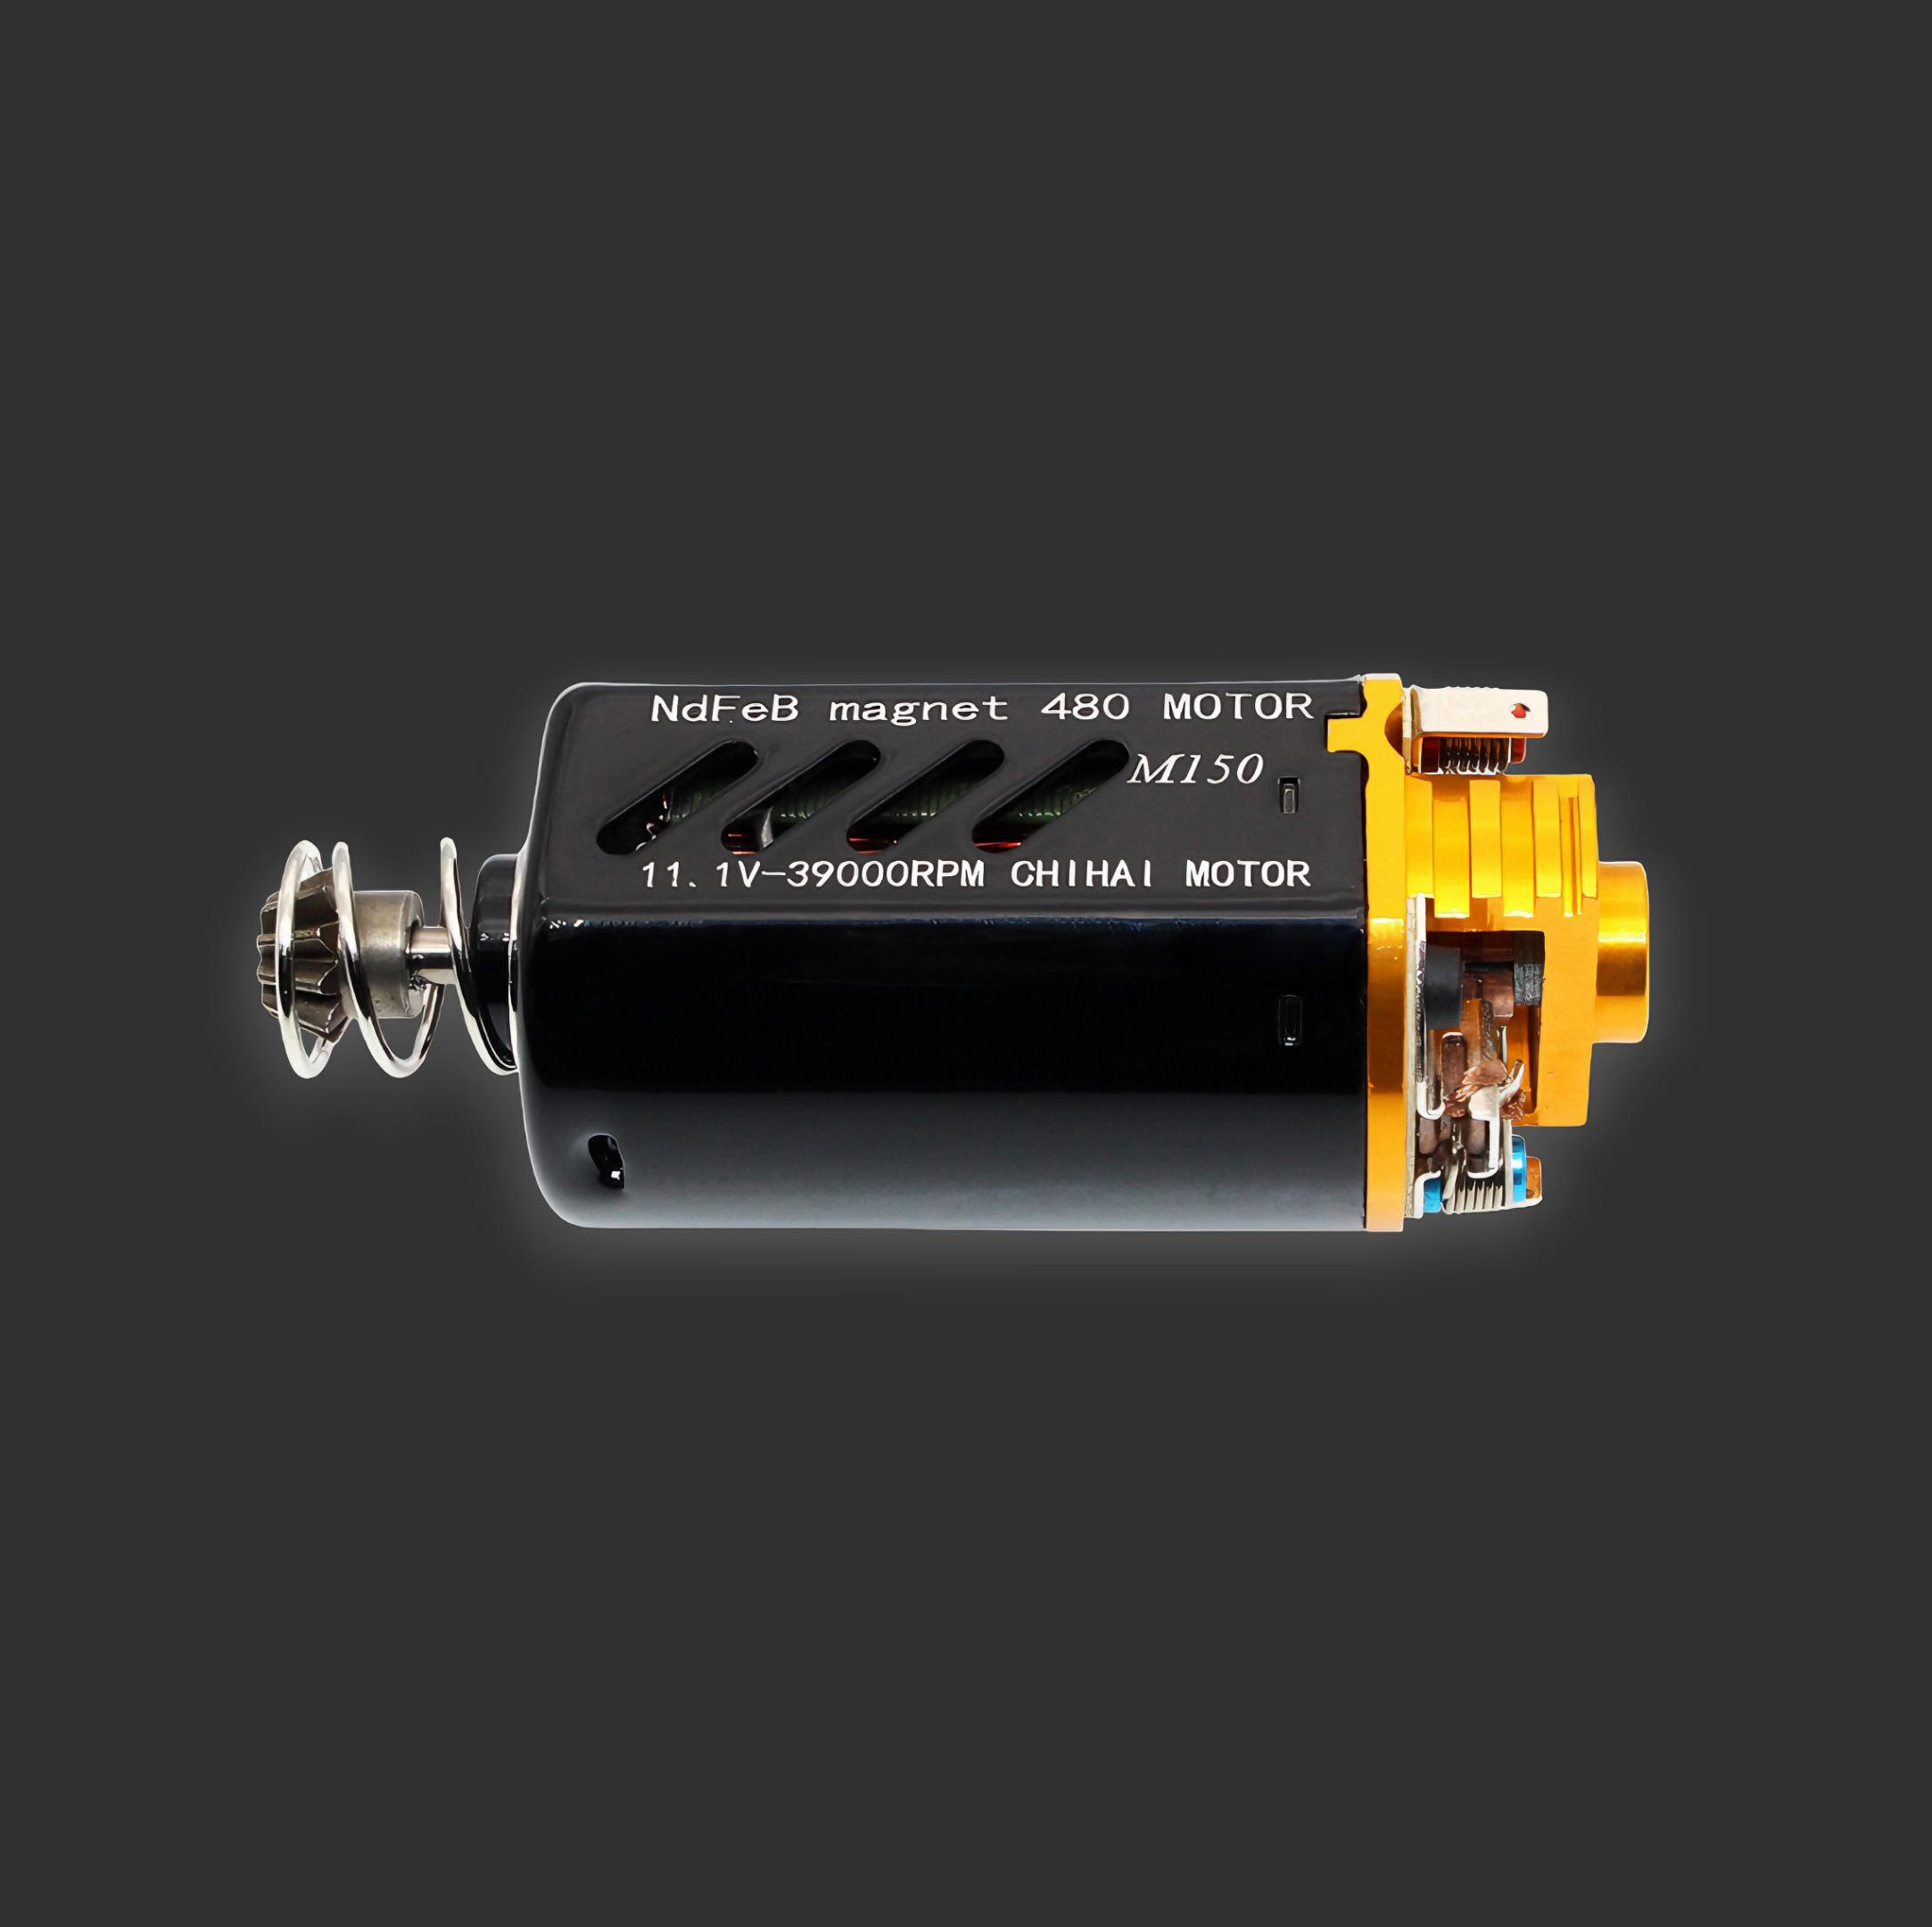 <img src="chf-480wa-8513g-motor-gelblaster-upgrade.jpg" alt="CHF-480WA-8513G motor designed for upgrading gel blasters, enhancing performance and power">